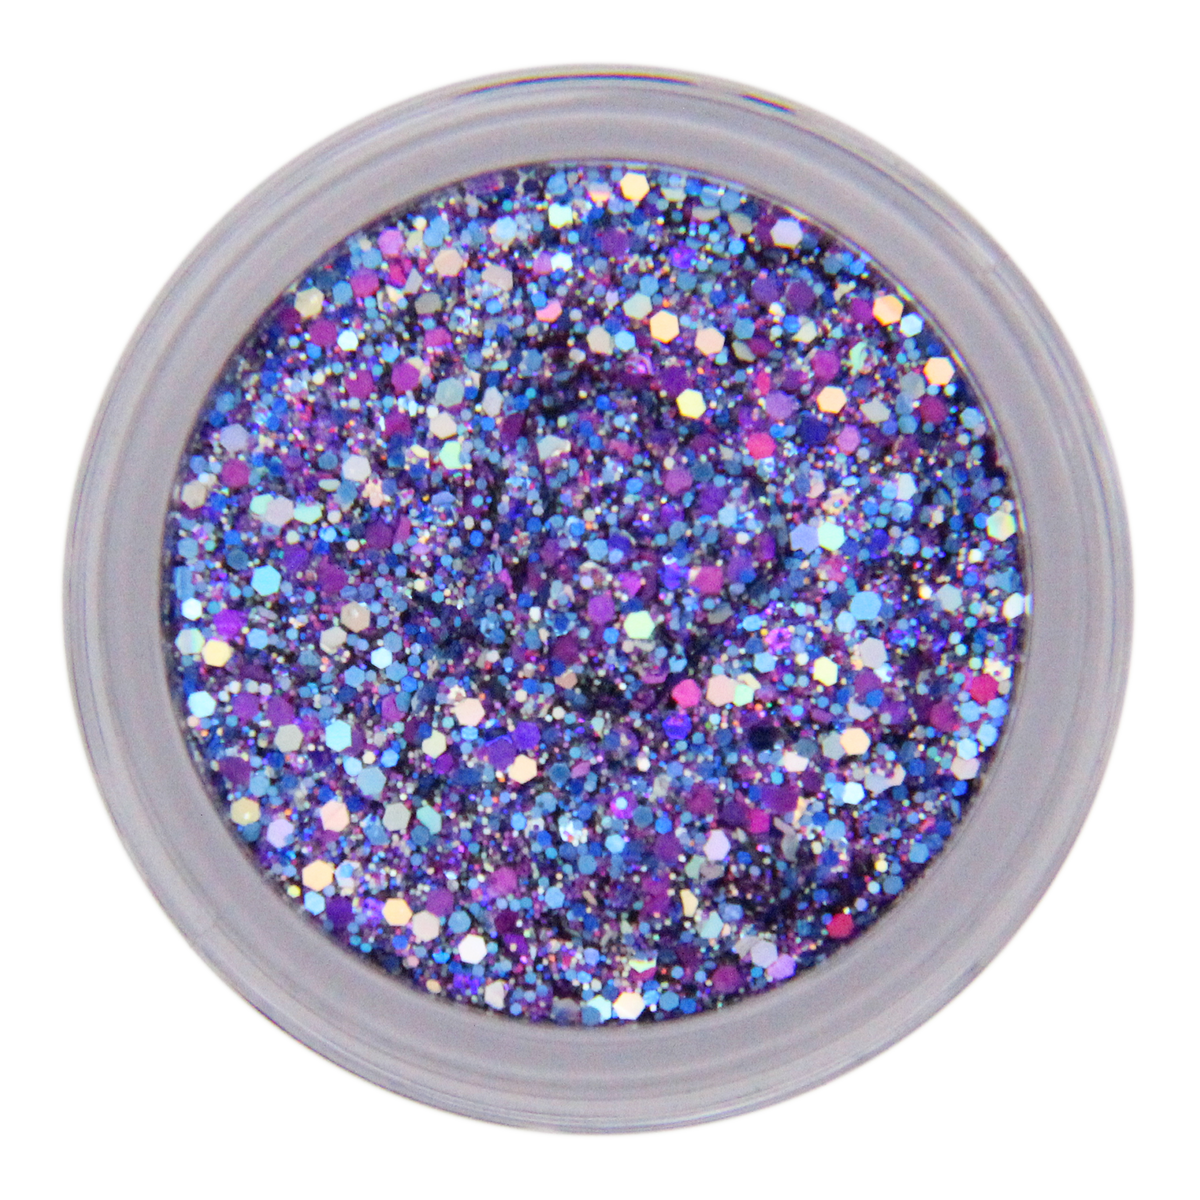 6-Color Metallic Stacked Jar – Uniglitter